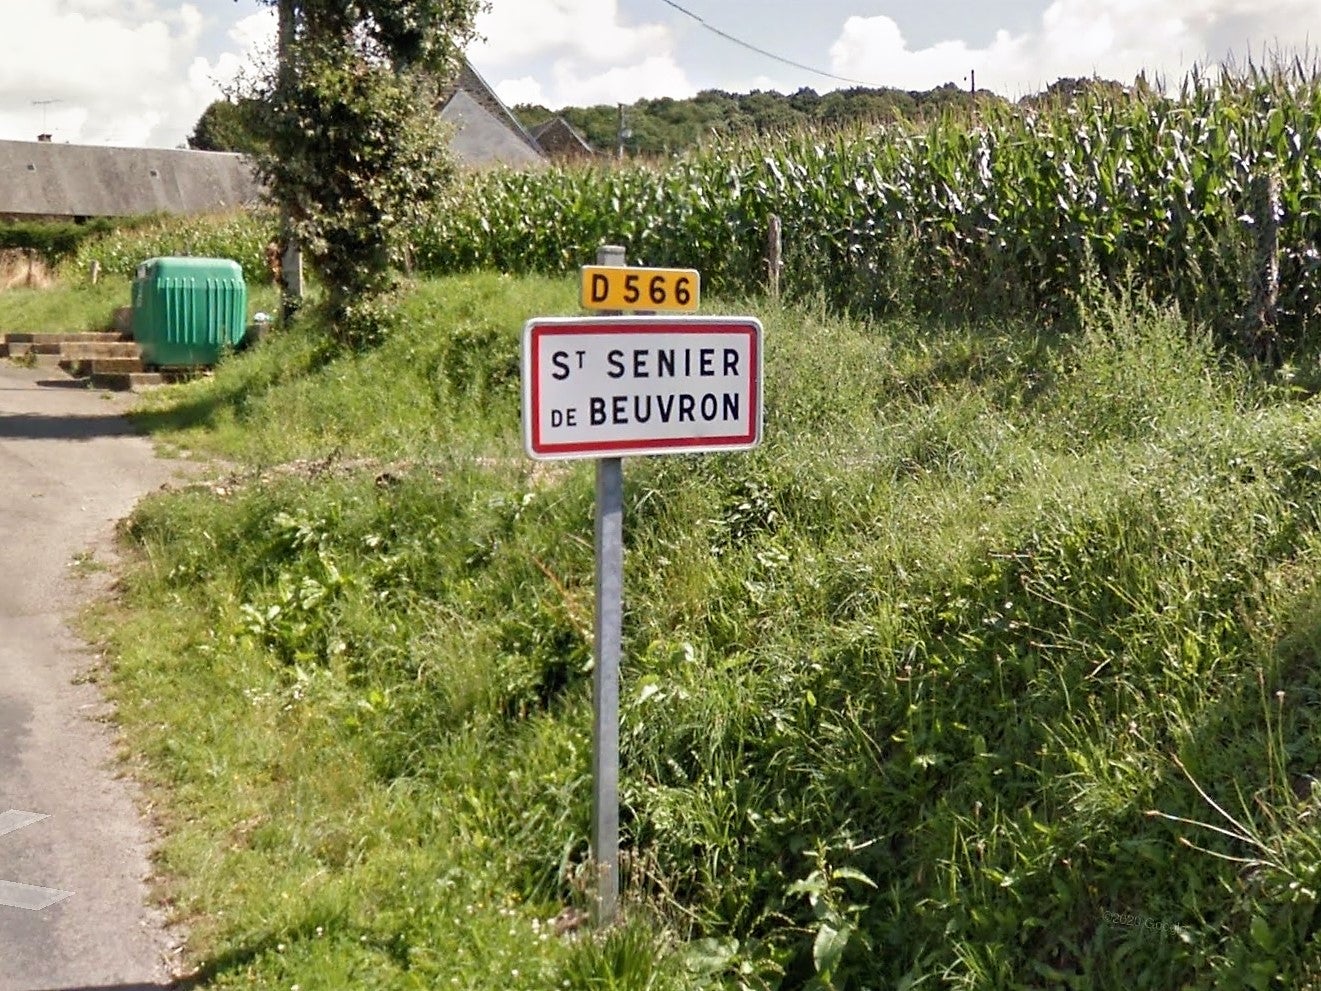 The village of St Senier de Beuvron in Normandy